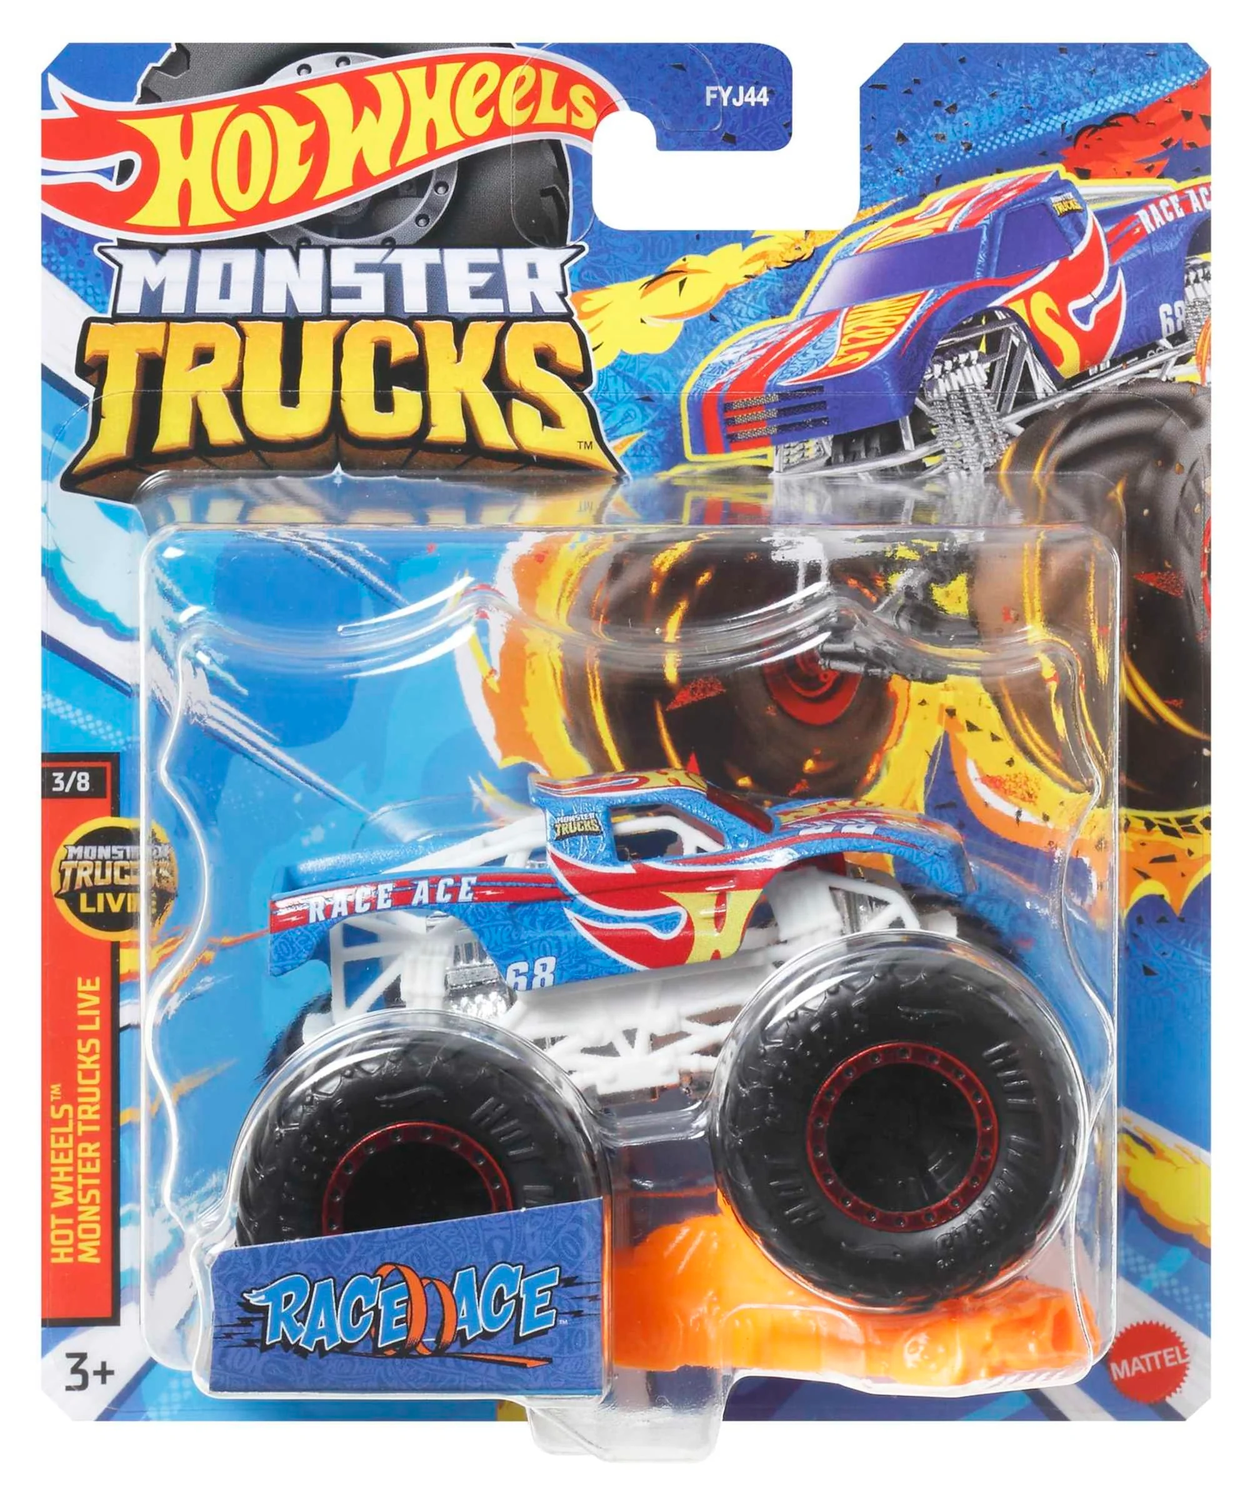 Hot Wheels Monster Trucks Veículo Sortido Mattel